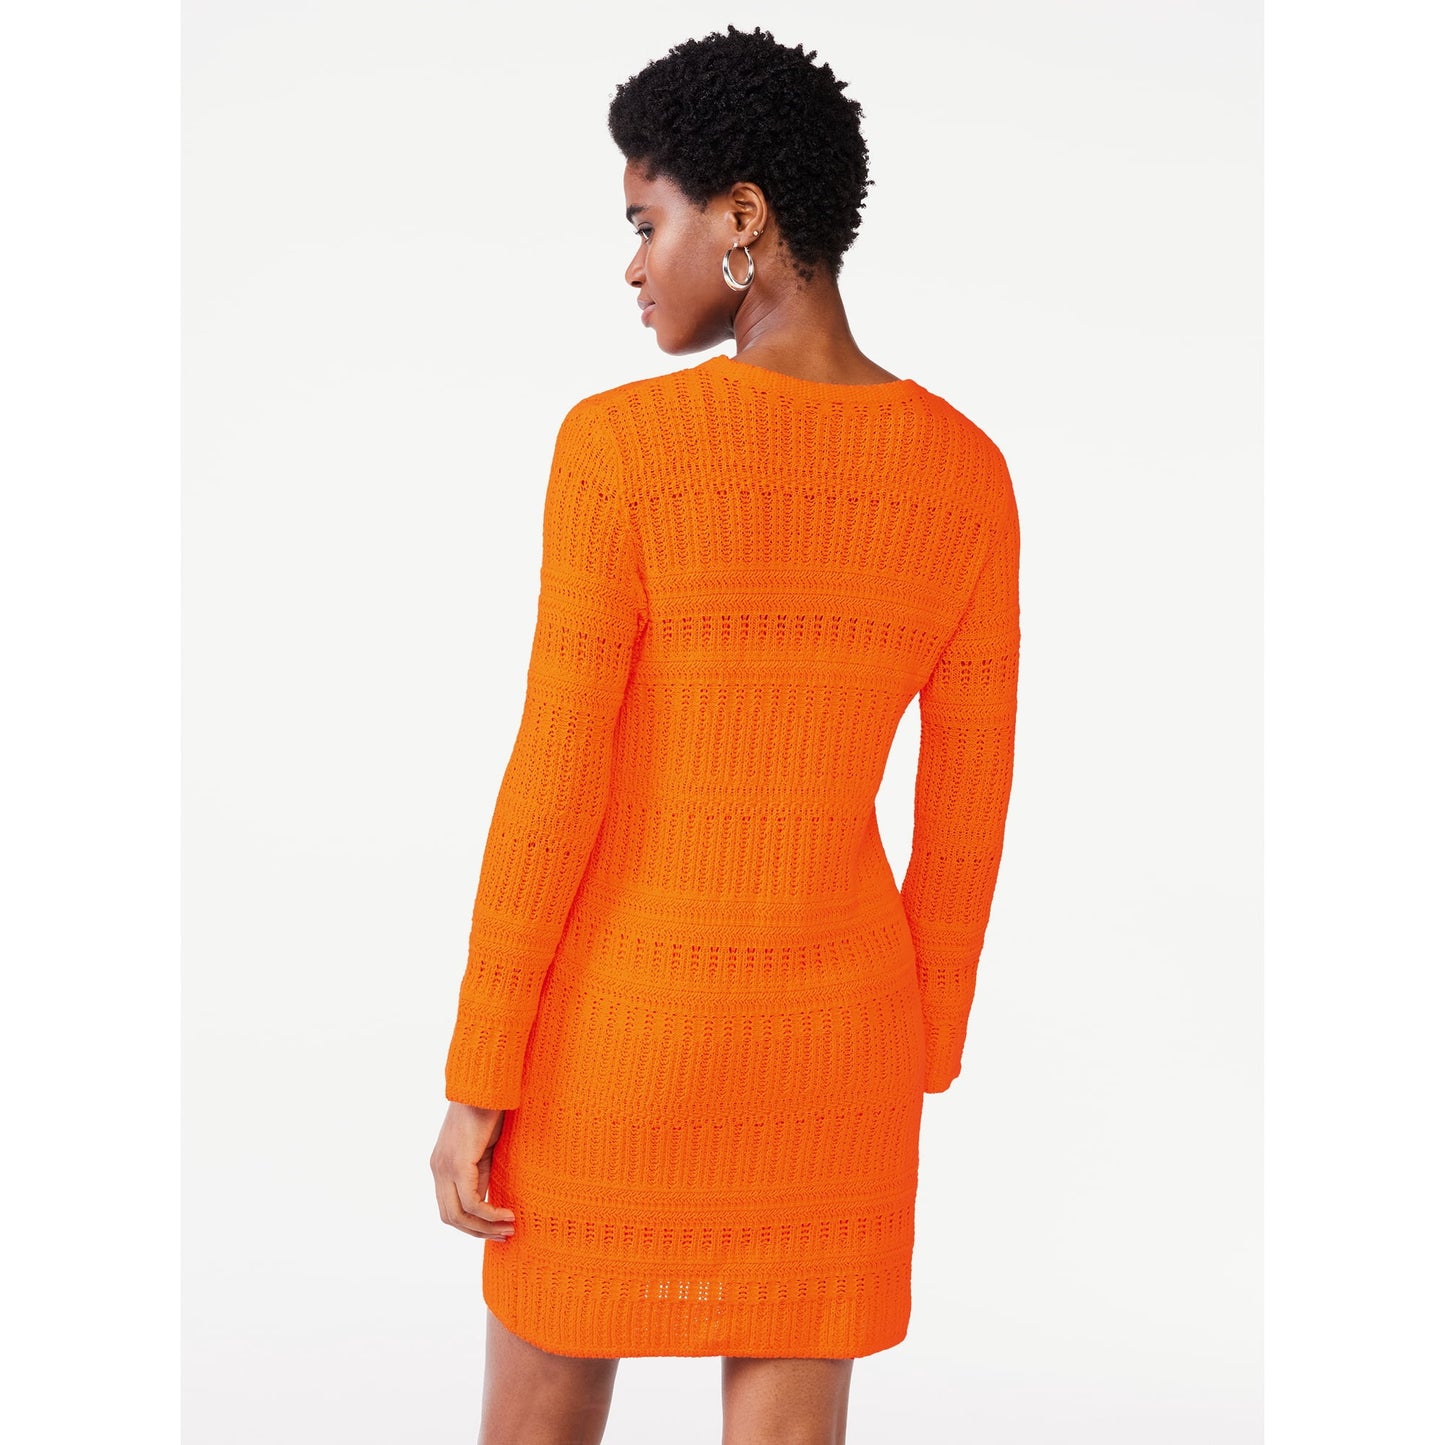 Scoop Womens Loose Fit Crochet Dress, Above Knee Length